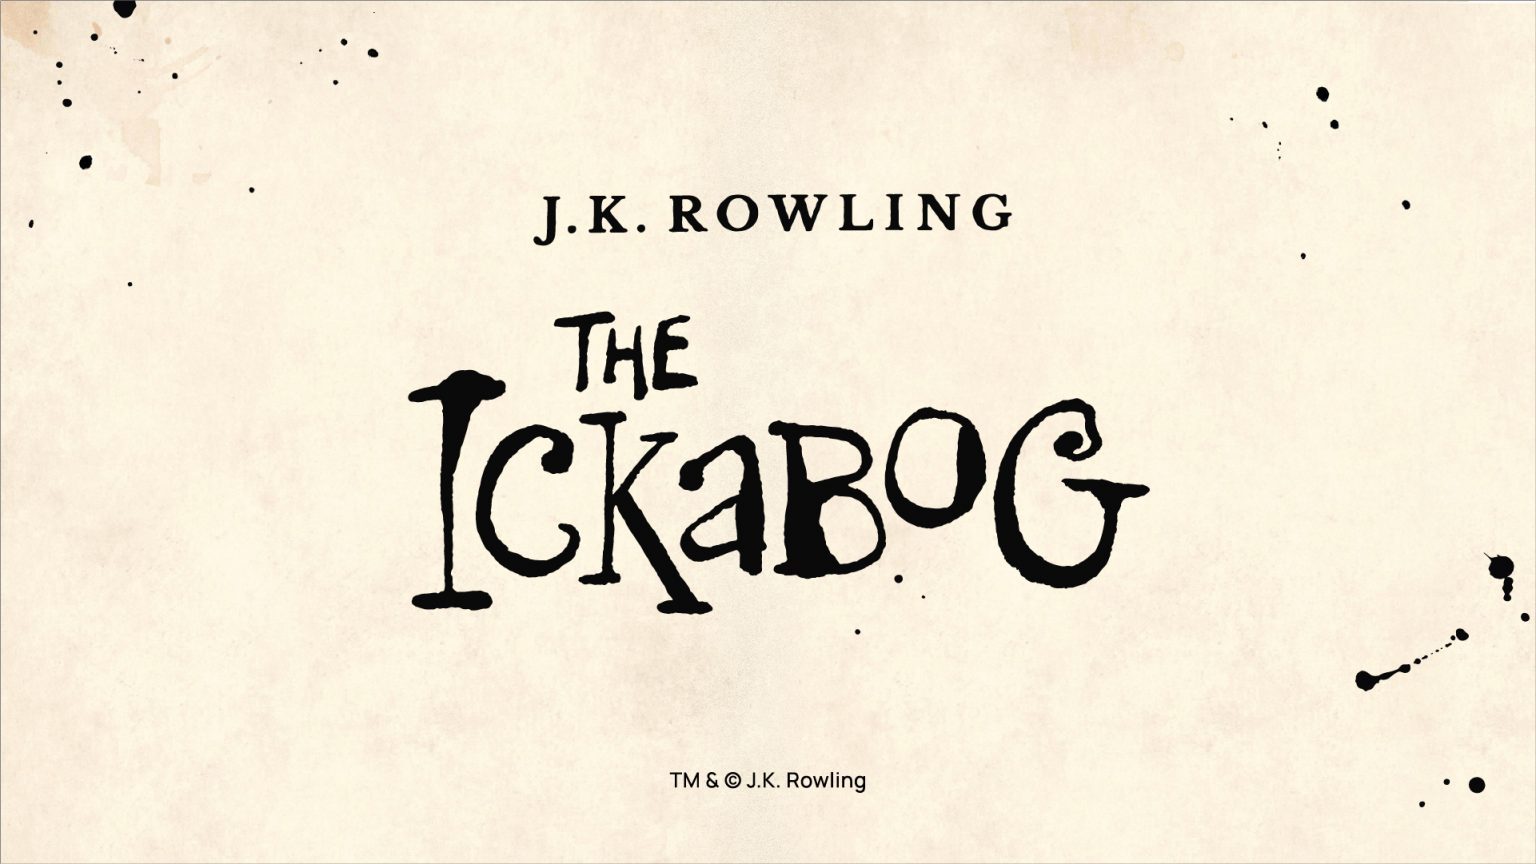 A Harry Potter Author J.K. Rowling To Publish New Kids’ Novel Online